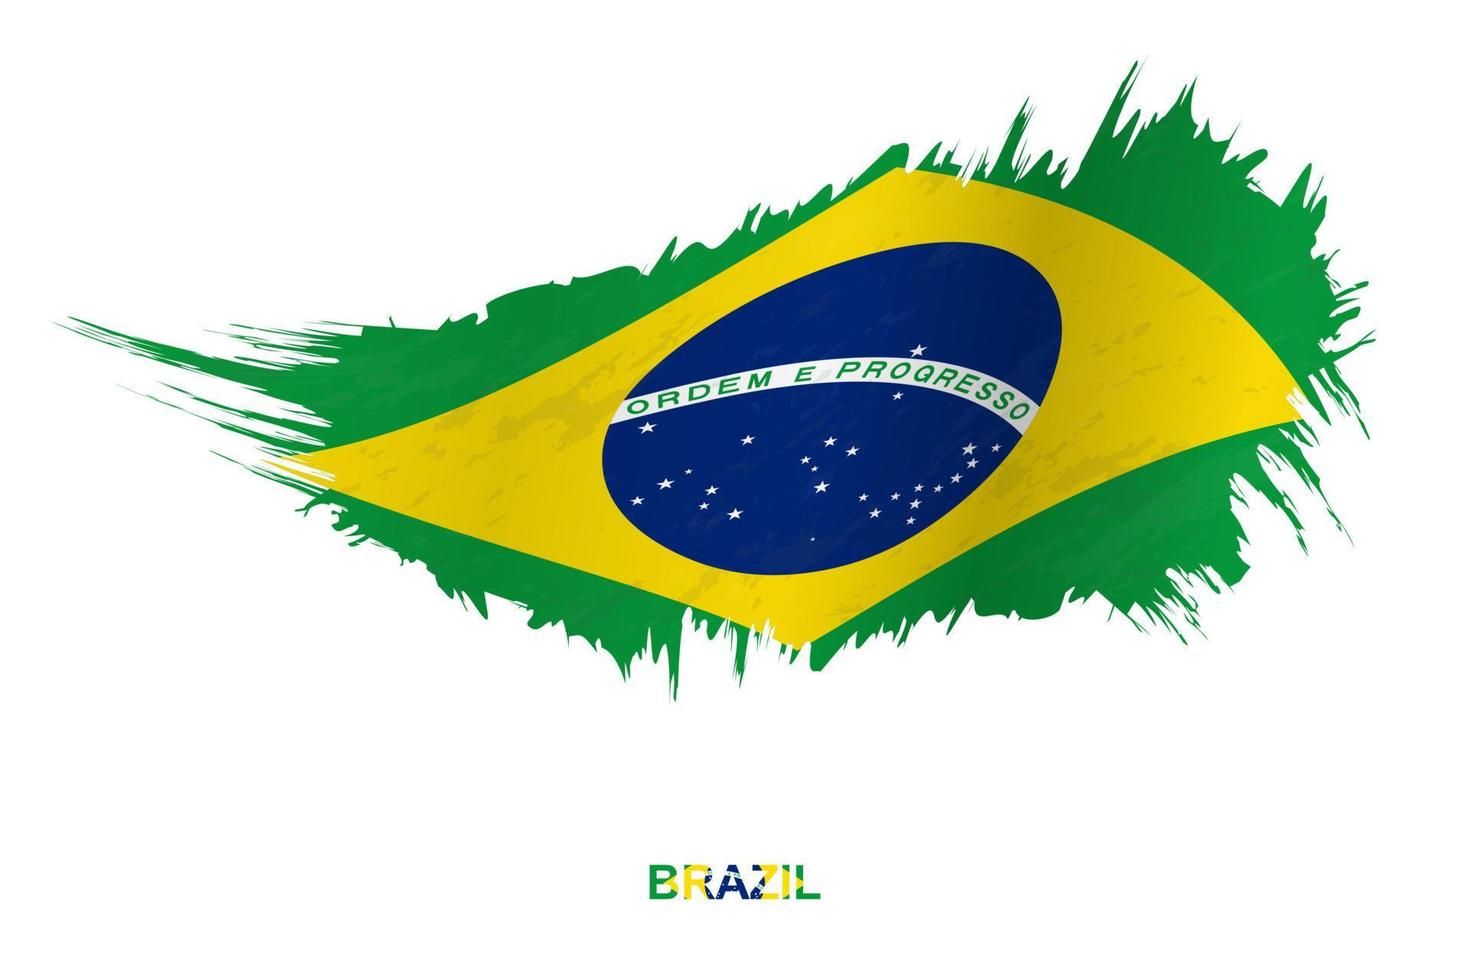 bandera de brasil en estilo grunge con efecto ondulante. vector